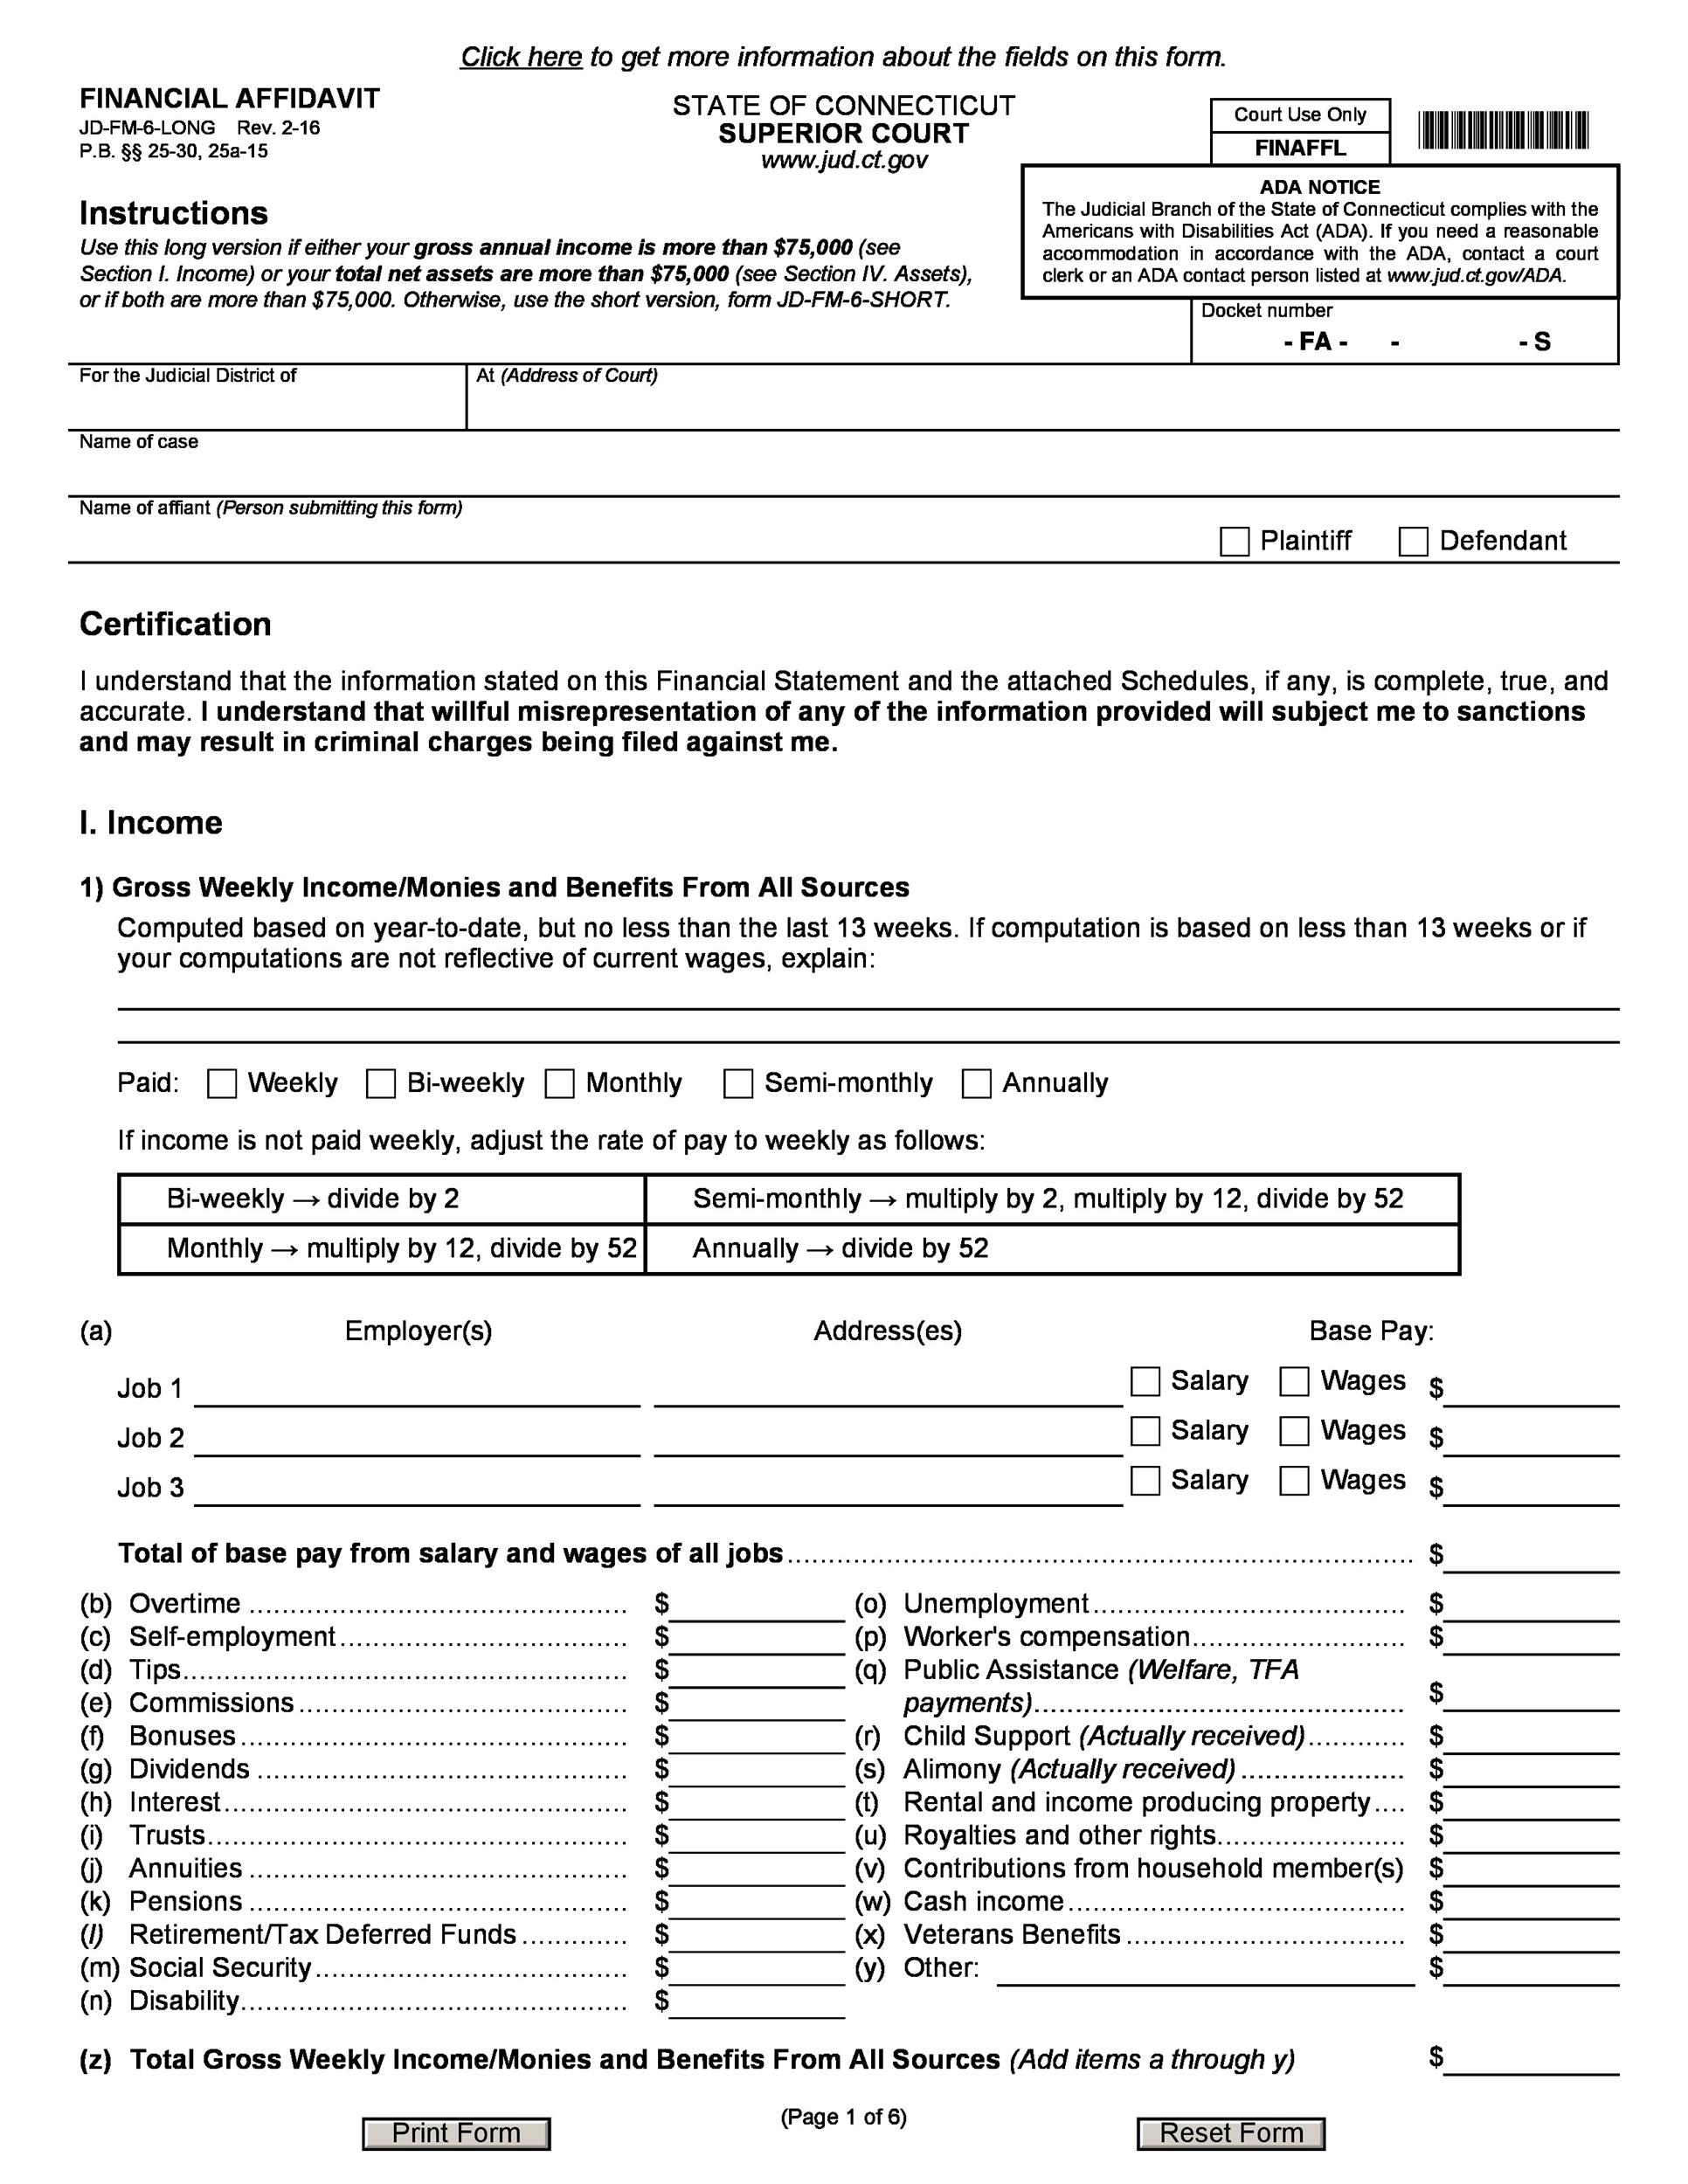 Free affidavit form 23